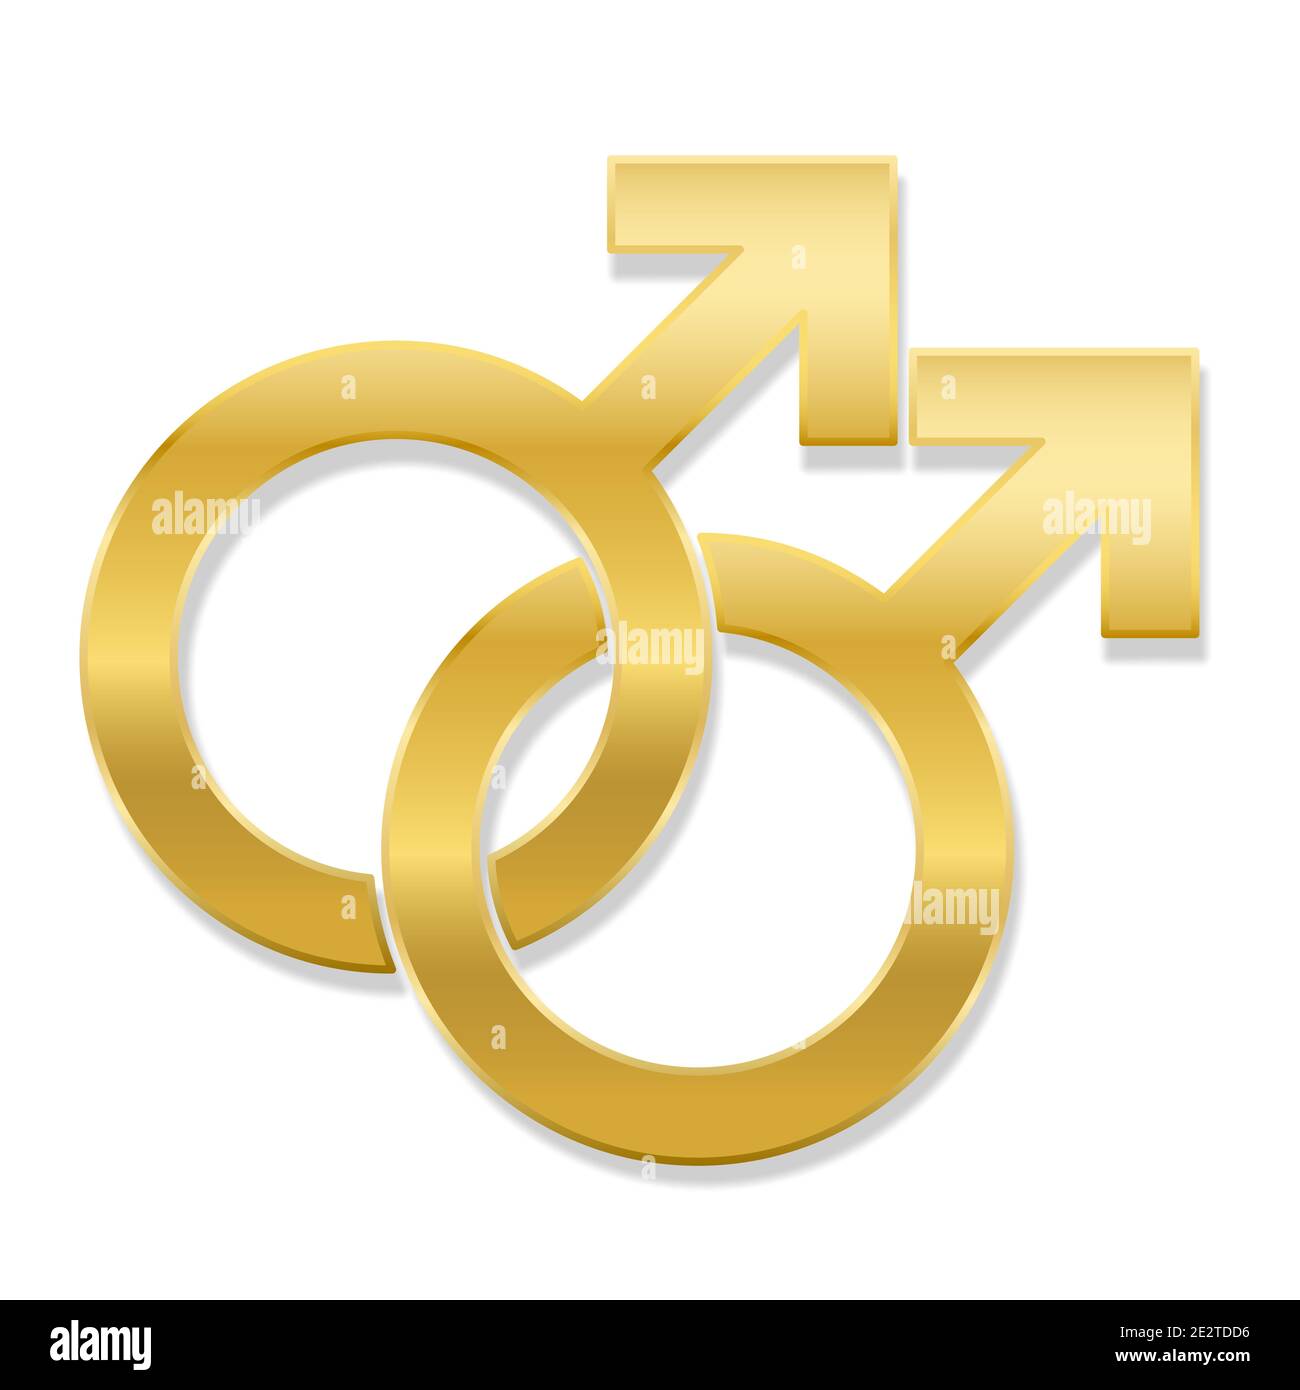 Gay love symbol, golden emblem style - logo illustration on white background. Stock Photo